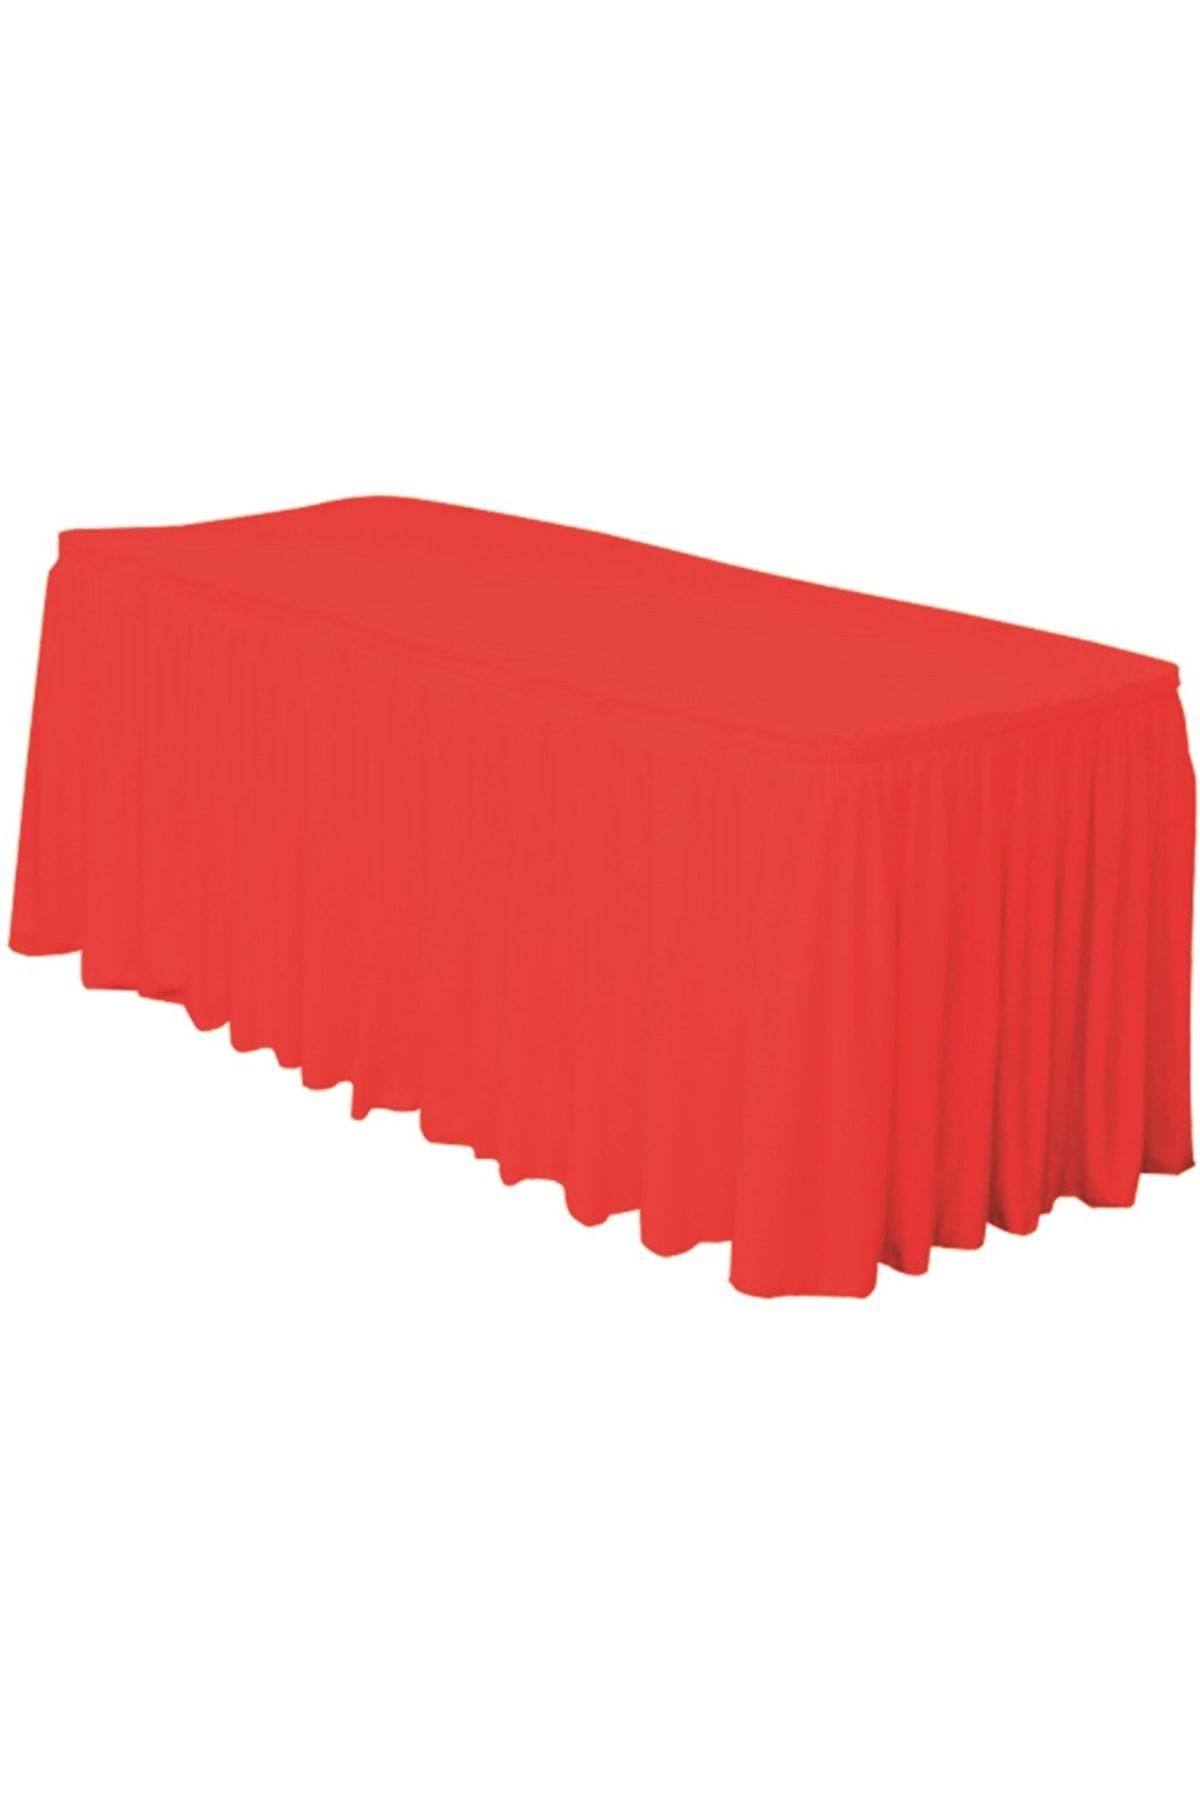 Roll Up Plastik Masa Eteği - Kırmızı - 75x426 Cm